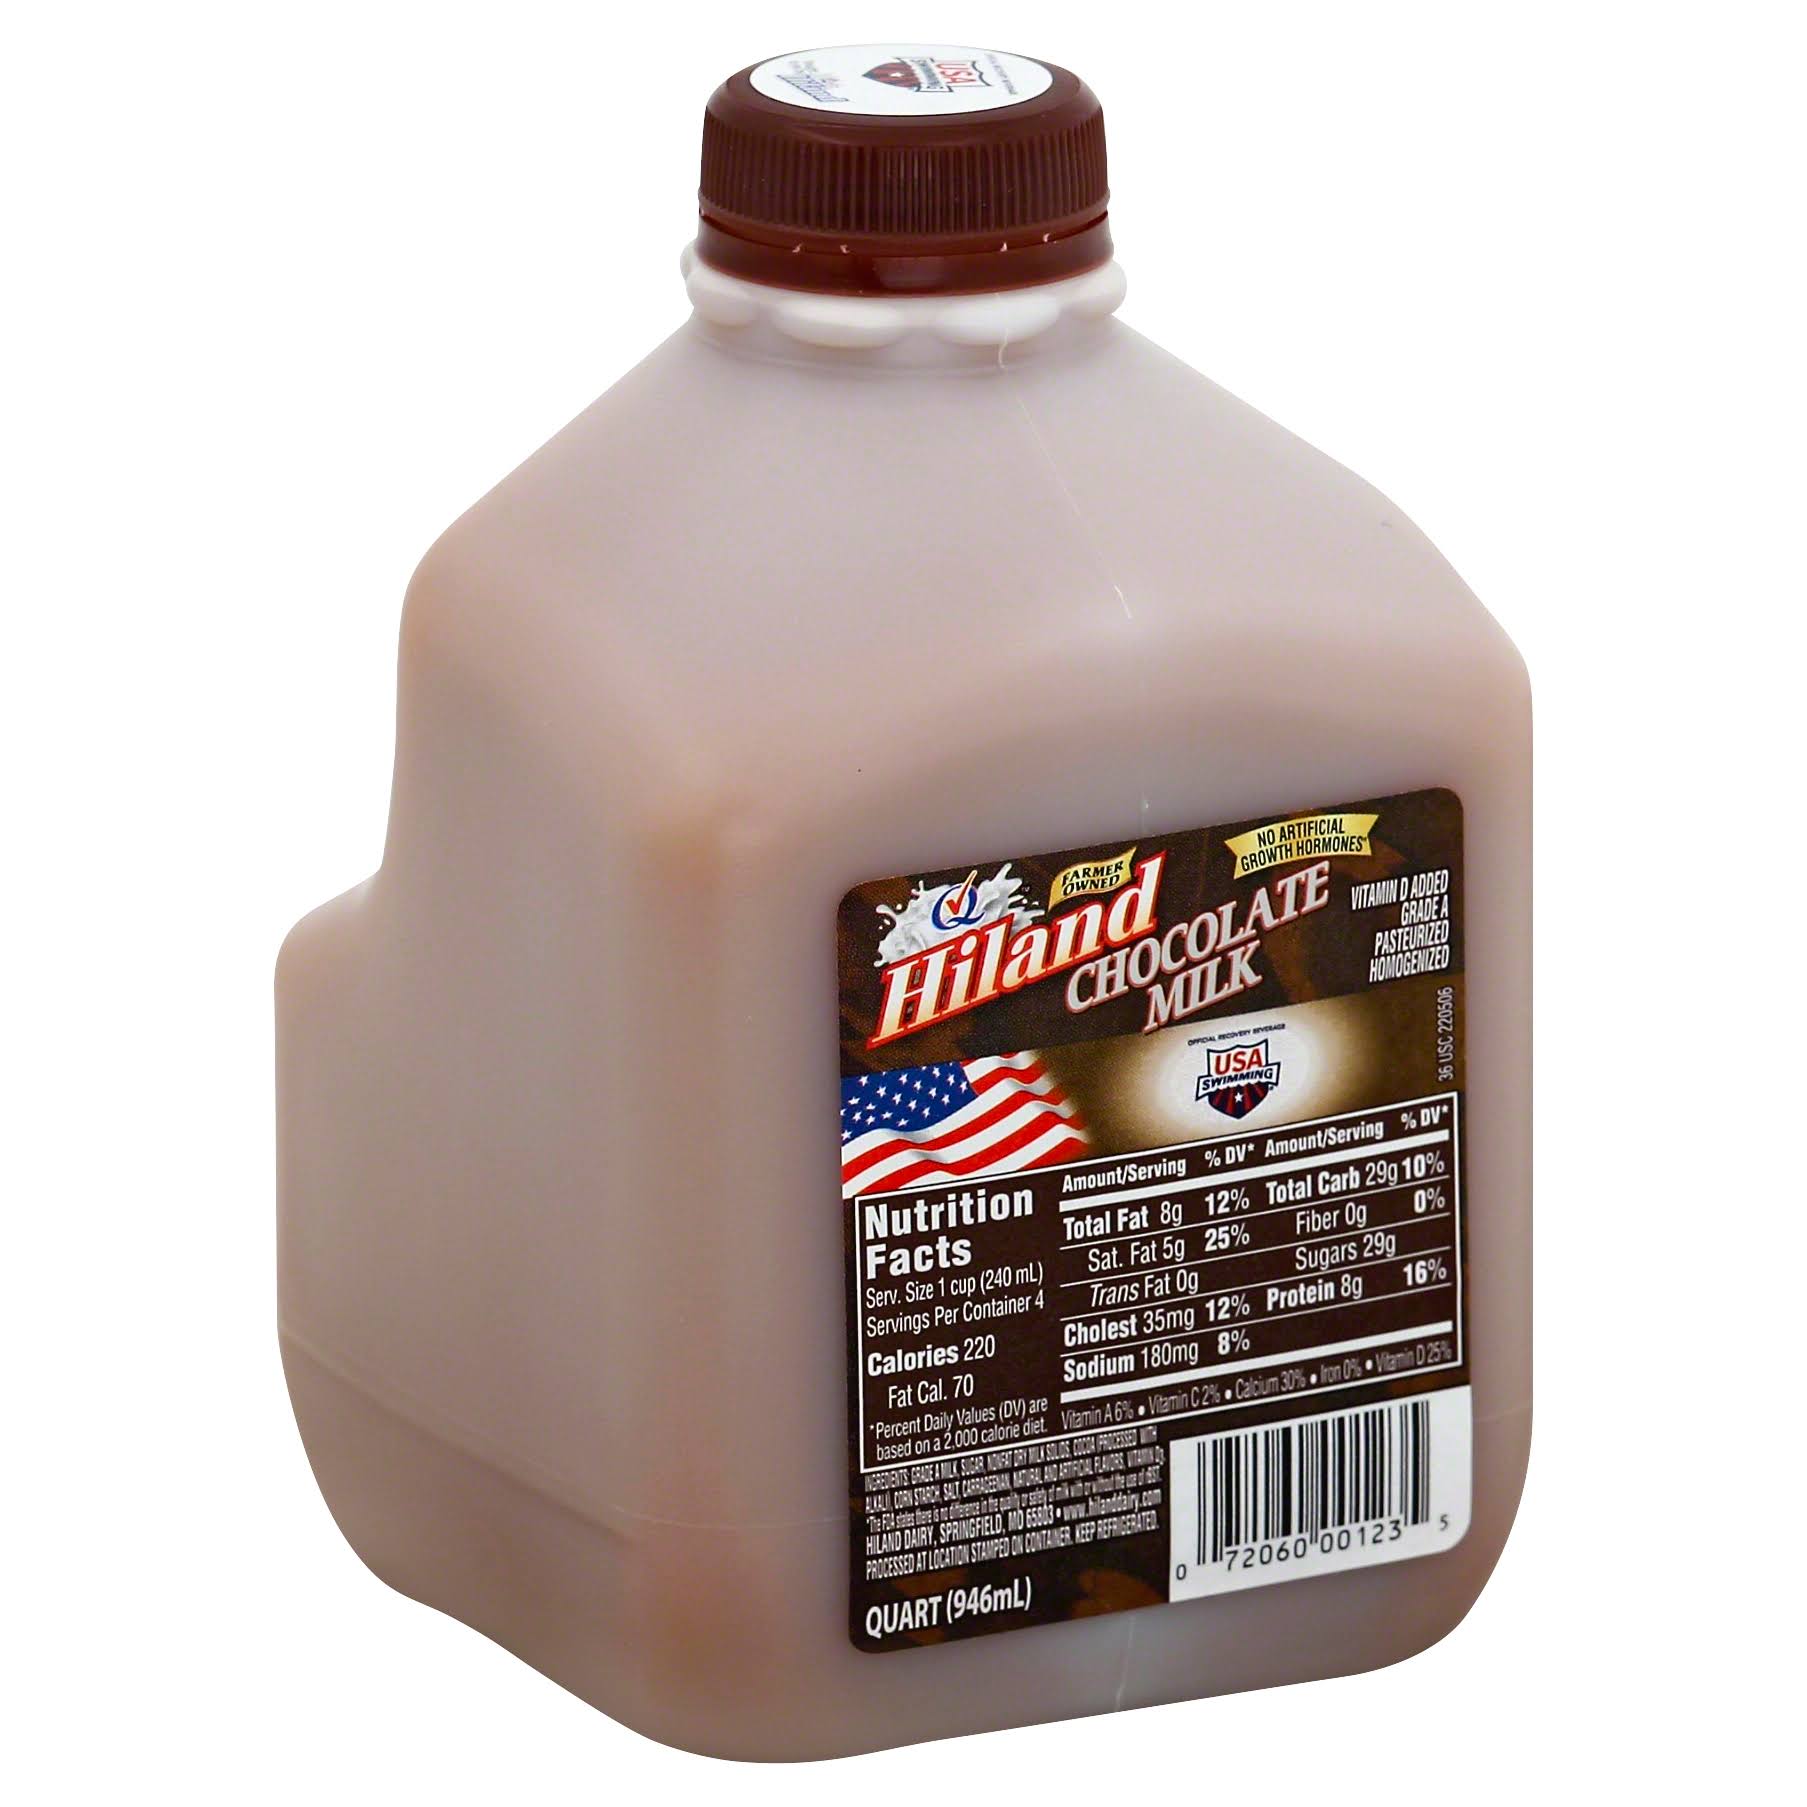 Hiland Chocolate Milk - 32oz